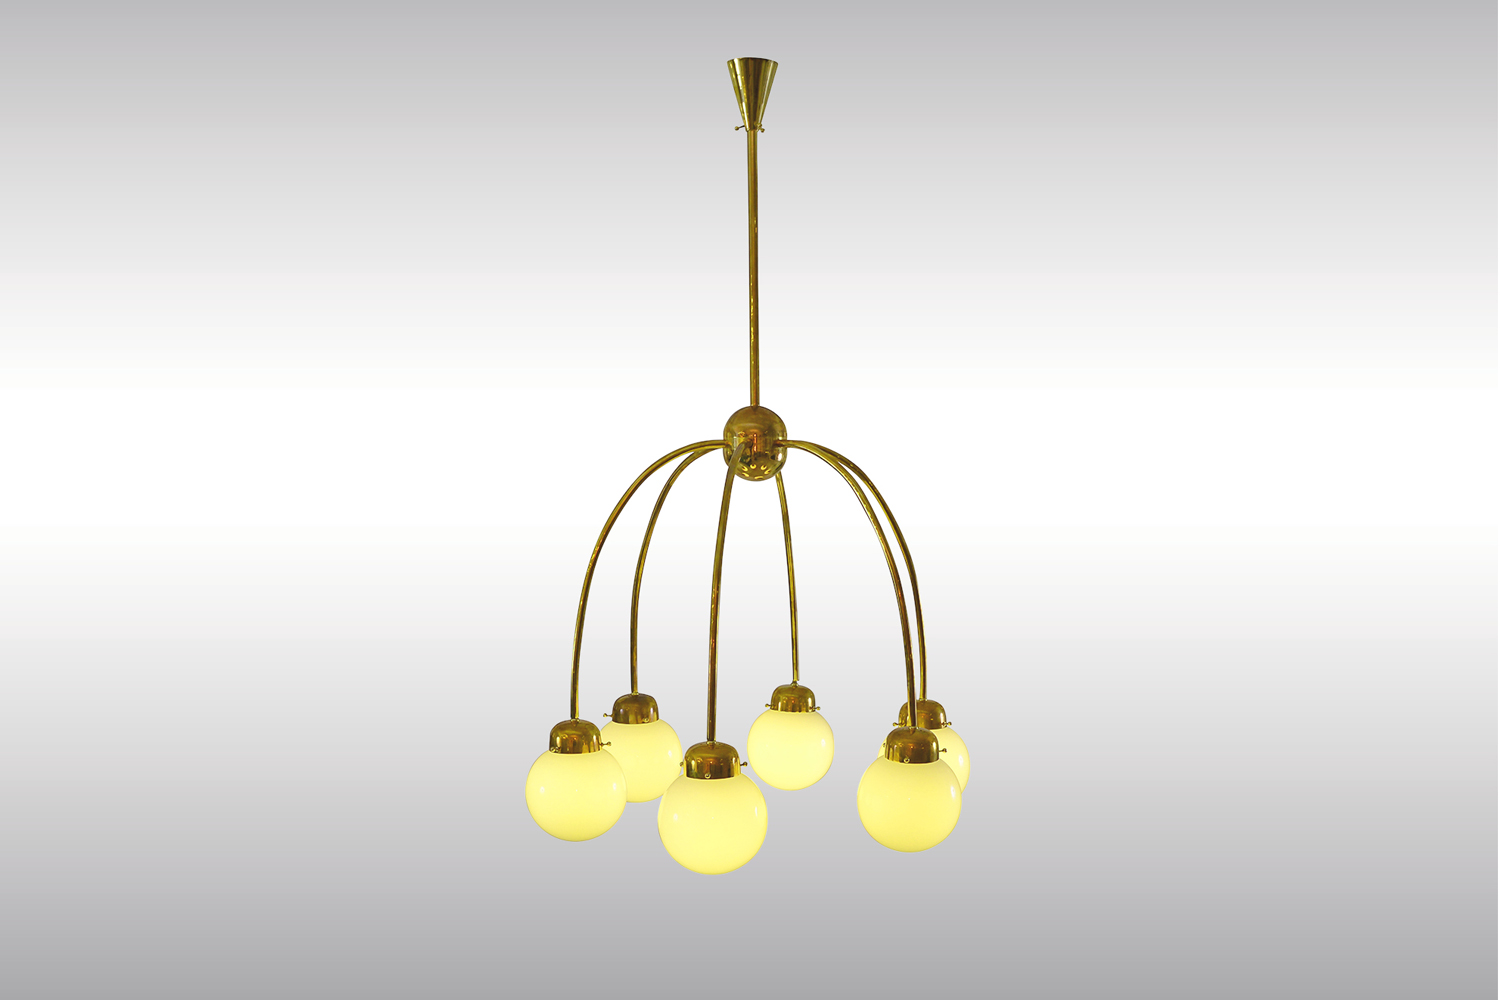 designed by josef hoffmann and wiener werkstaette, the 6 arm chandelier is  18